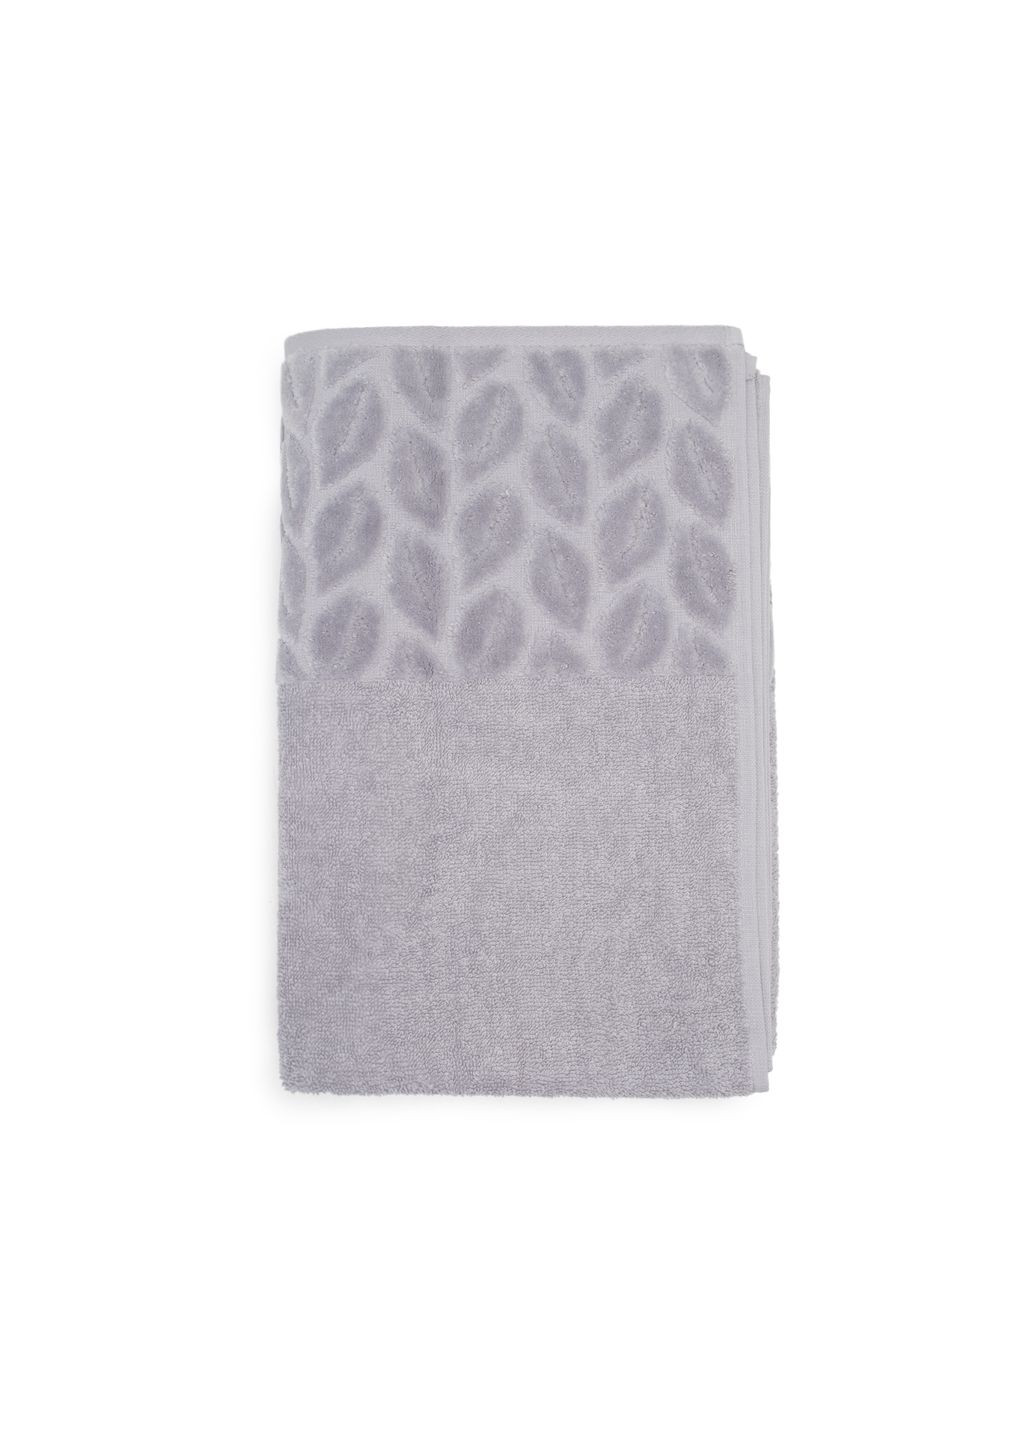 Soho полотенце цвет серый цб-00249459 серый производство - Турция